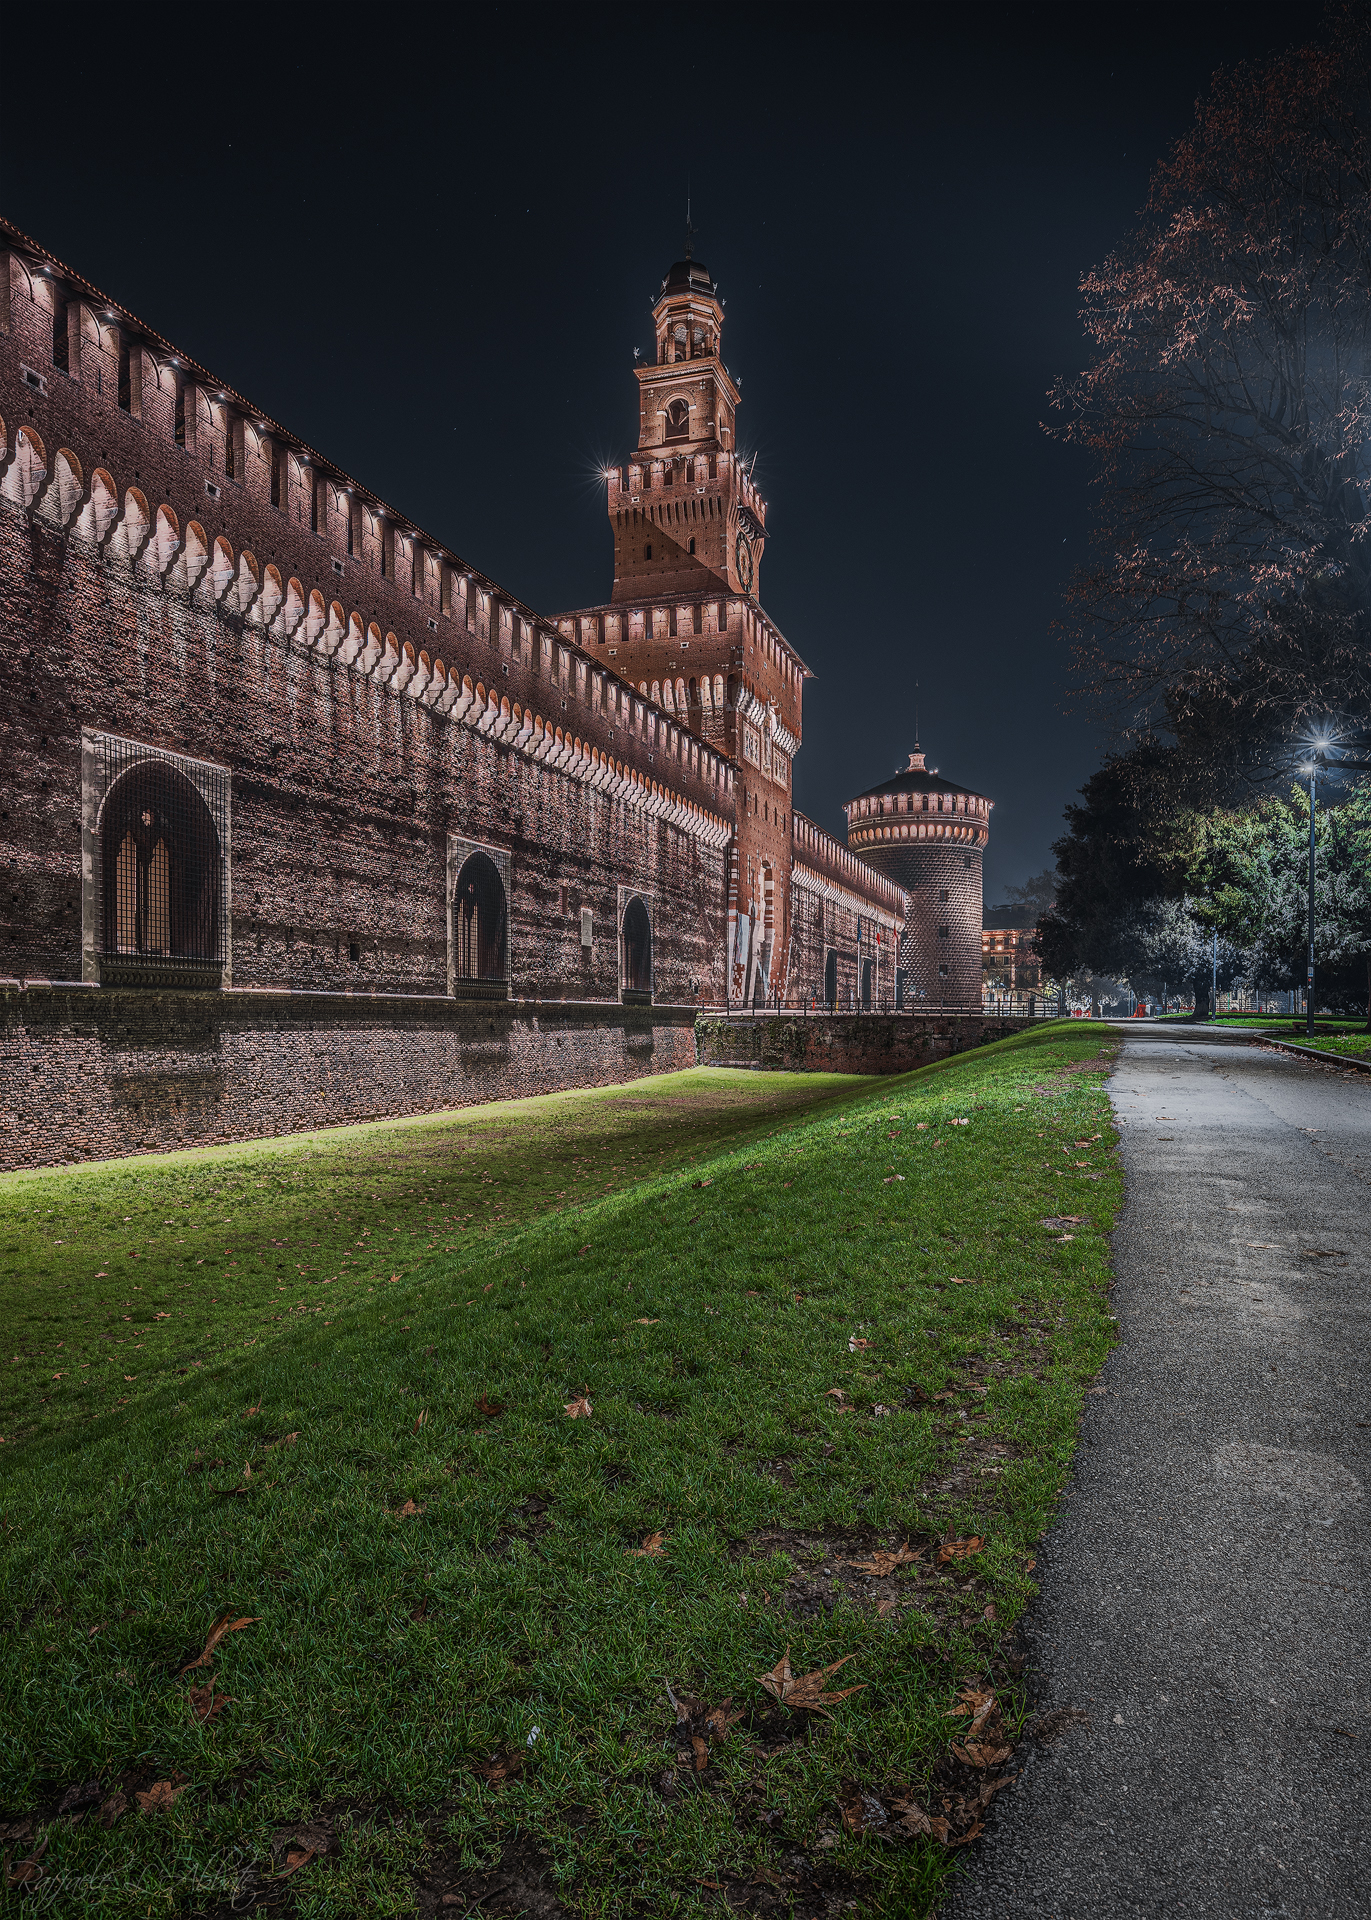 The Sforza Castle in Milan...